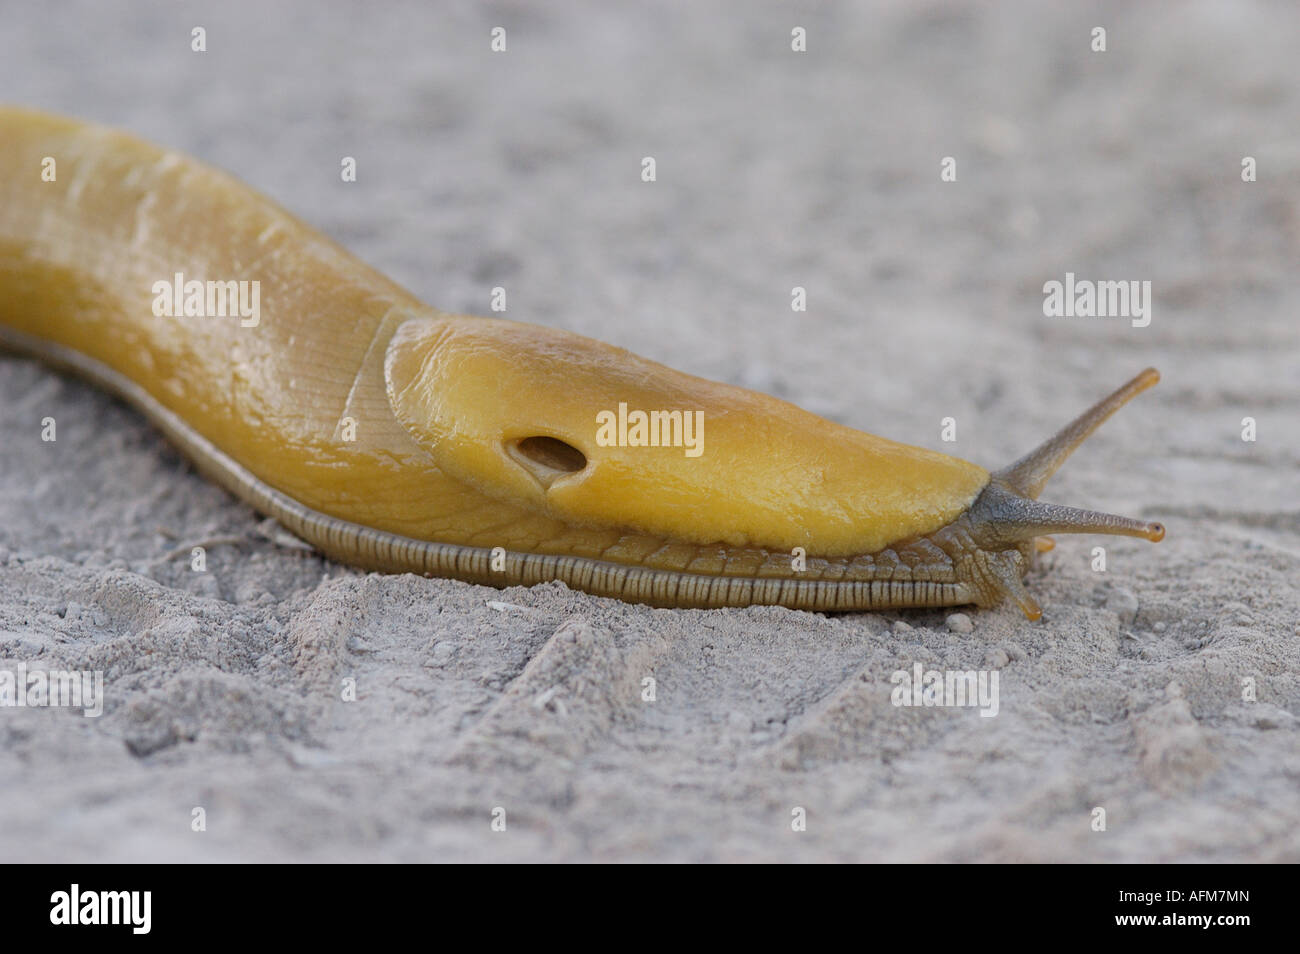 Banana slug with visible pneumostone Ariolimax columbianus Russian Ridge Open Space Preserve California USA Stock Photo